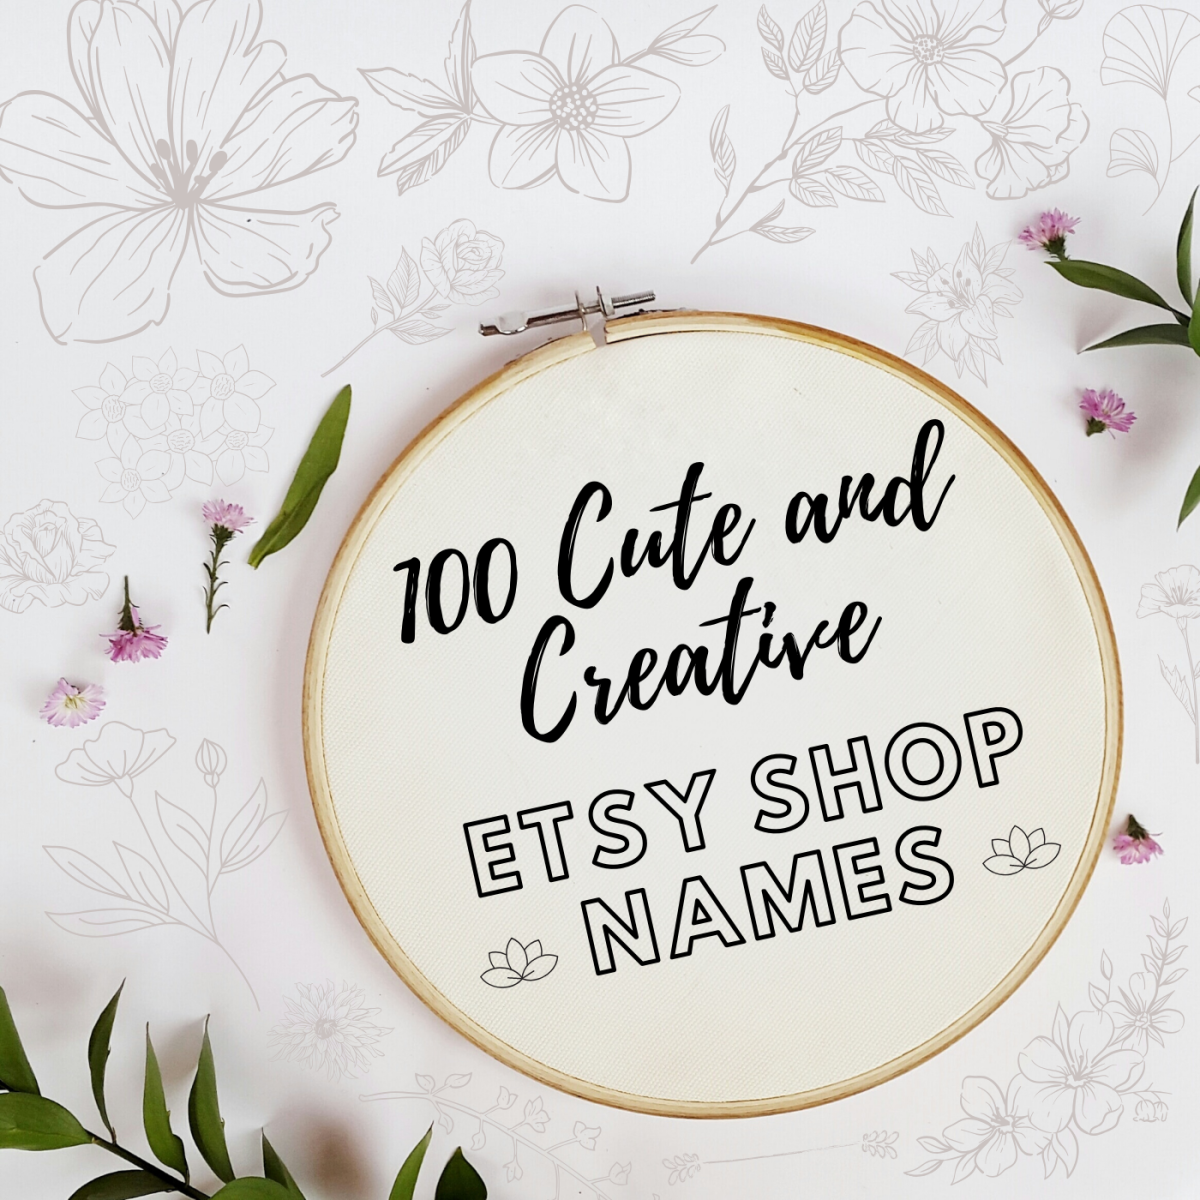 100 Crafty Etsy Shop Name Ideas Toughnickel